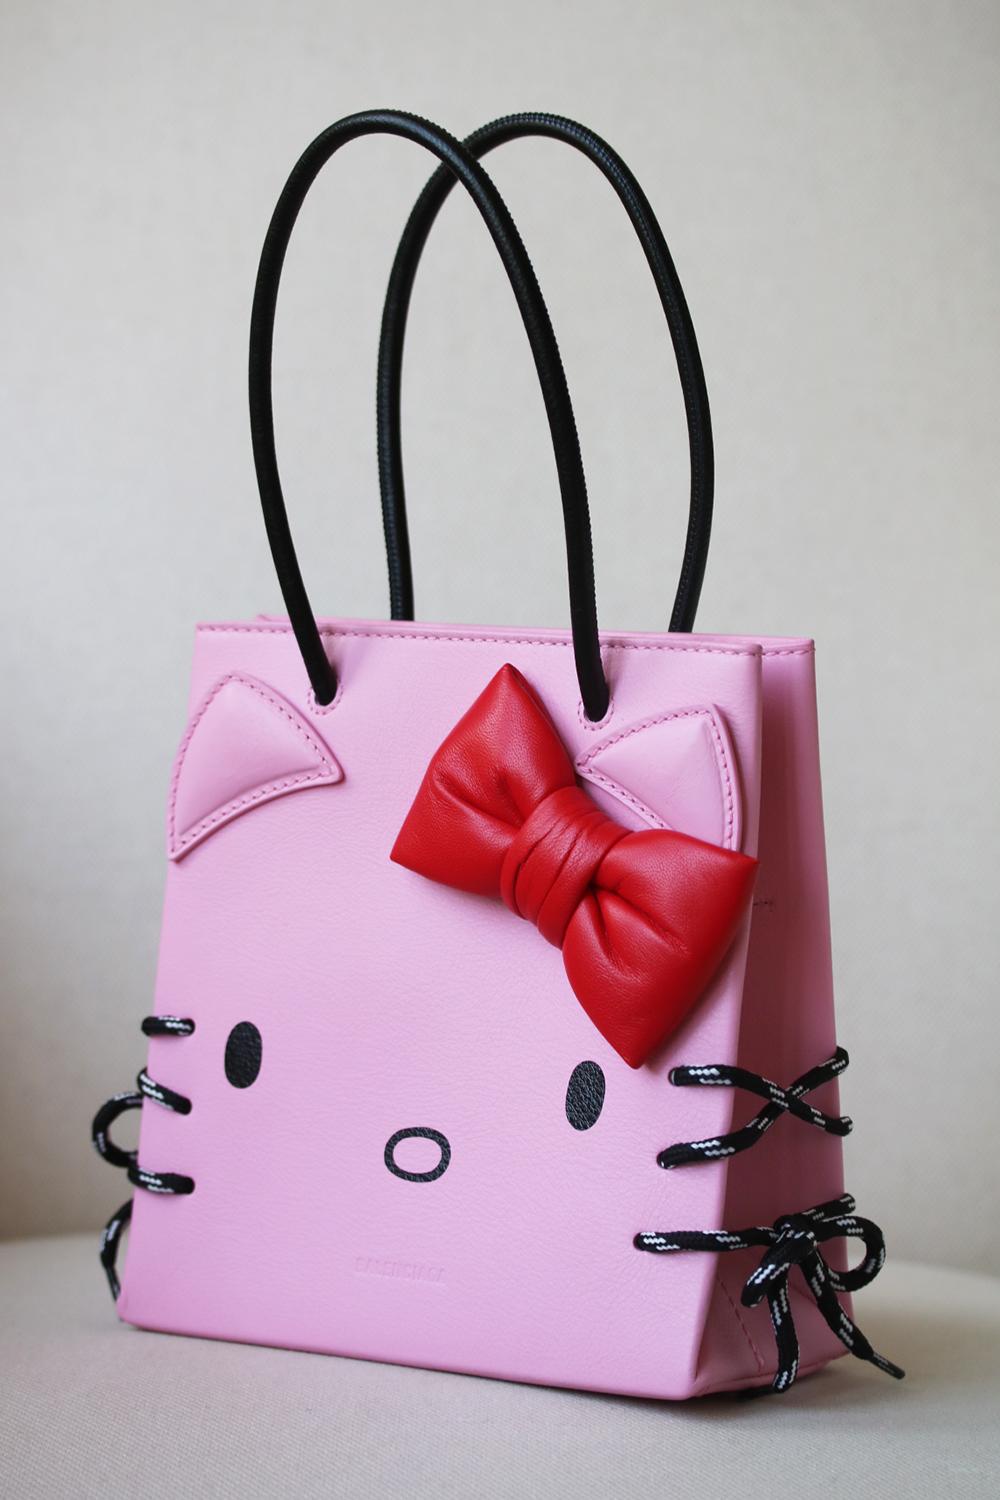 Balenciaga Hello Kitty - For Sale on 1stDibs | balenciaga hello kitty  handbag, balenciaga hello kitty purse, balenciaga bag hello kitty